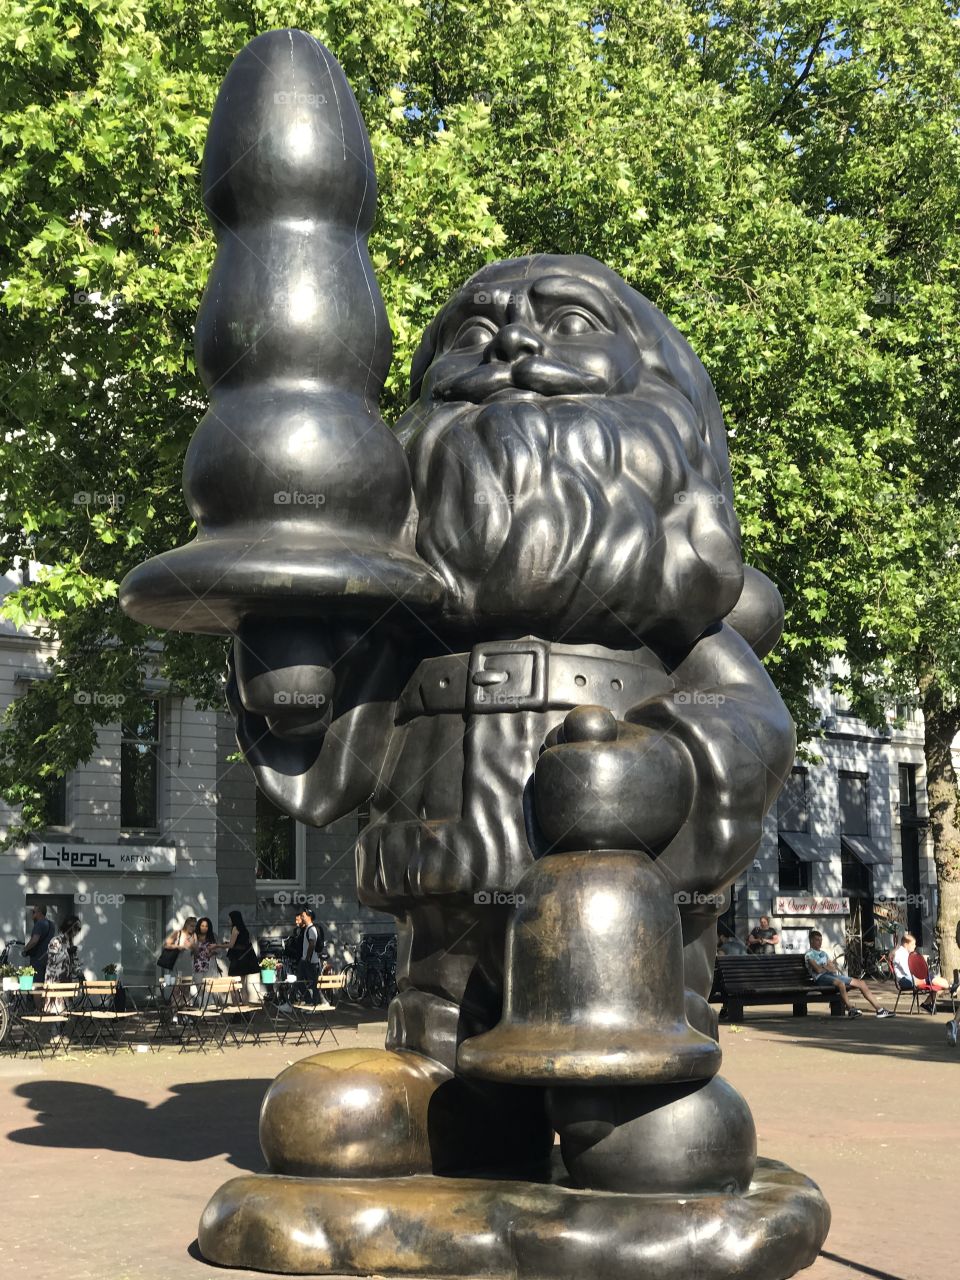 Santa
Santa clause 
Statue 
Amsterdam 
Netherlands 